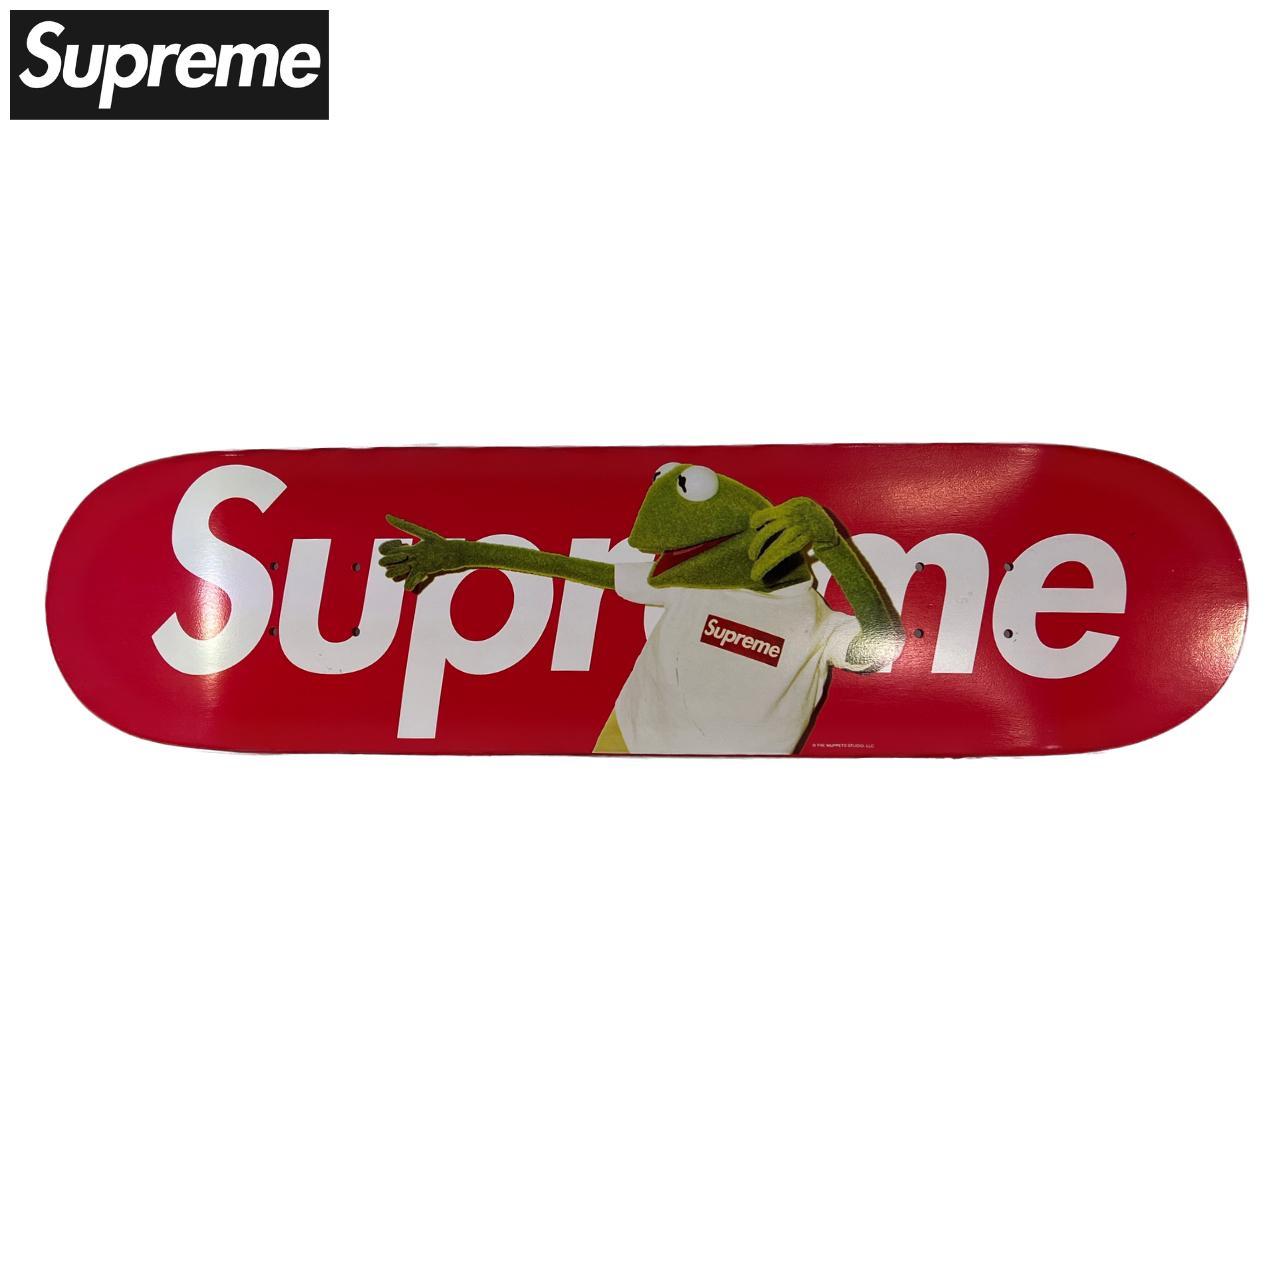 Supreme 2008 Kermit Skateboard Deck 100% authentic, - Depop